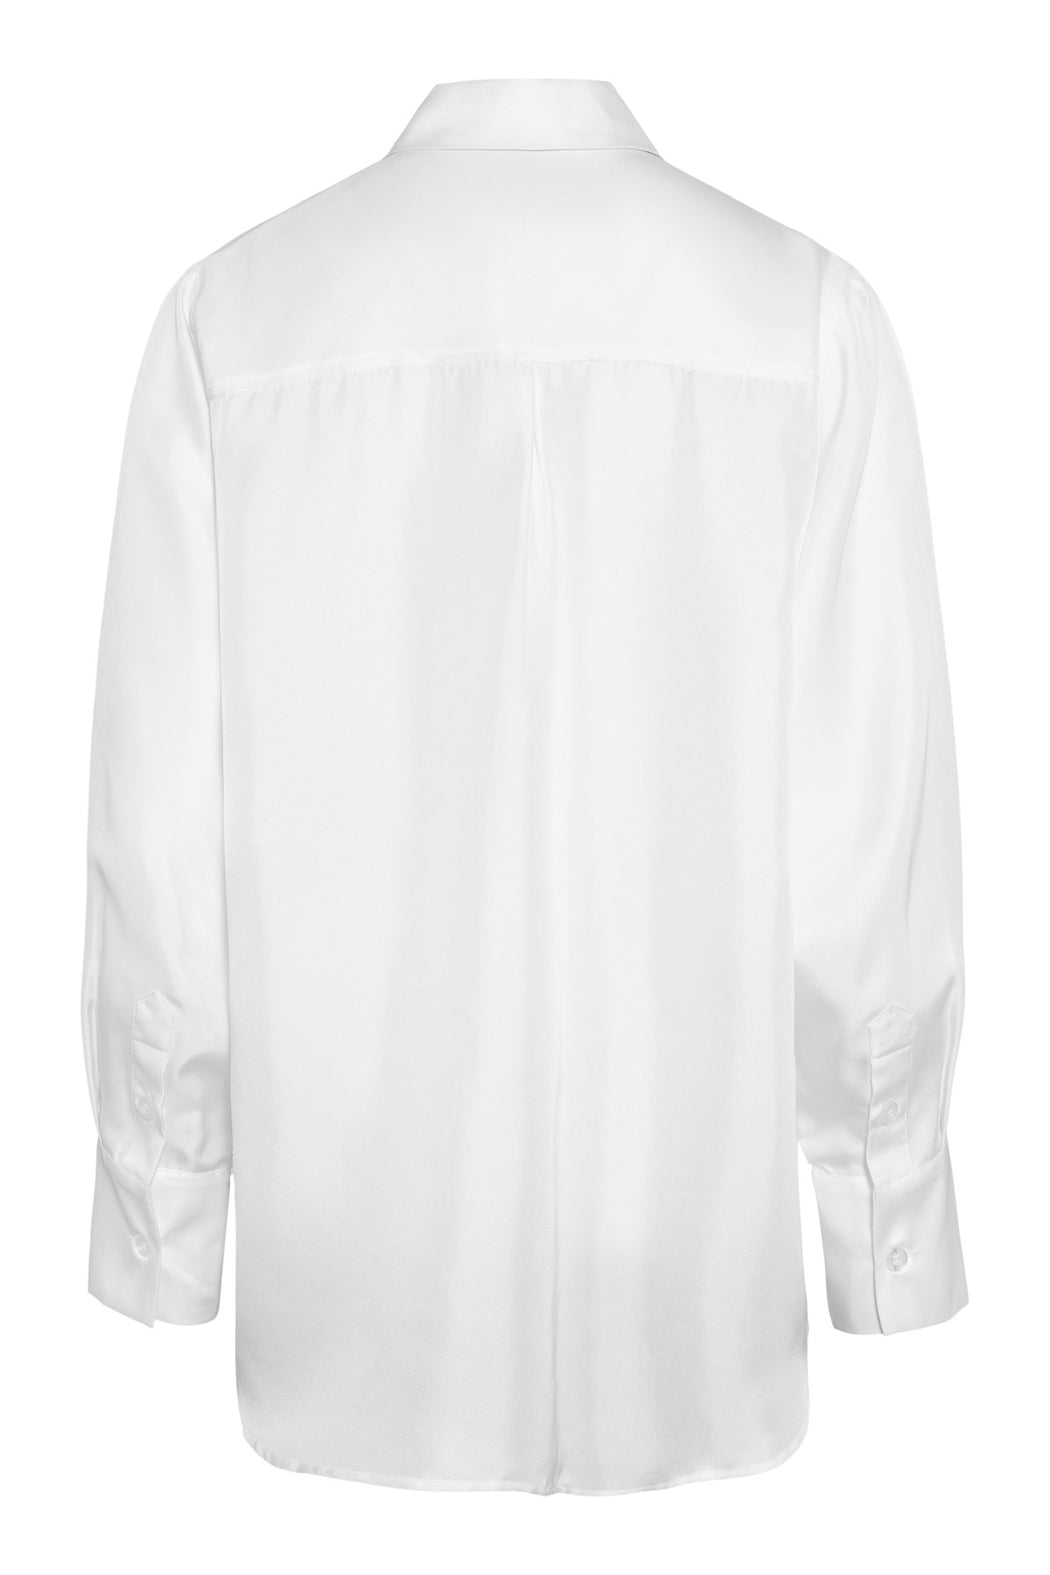 Envelope1976 Braga shirt - SIlk Shirt White